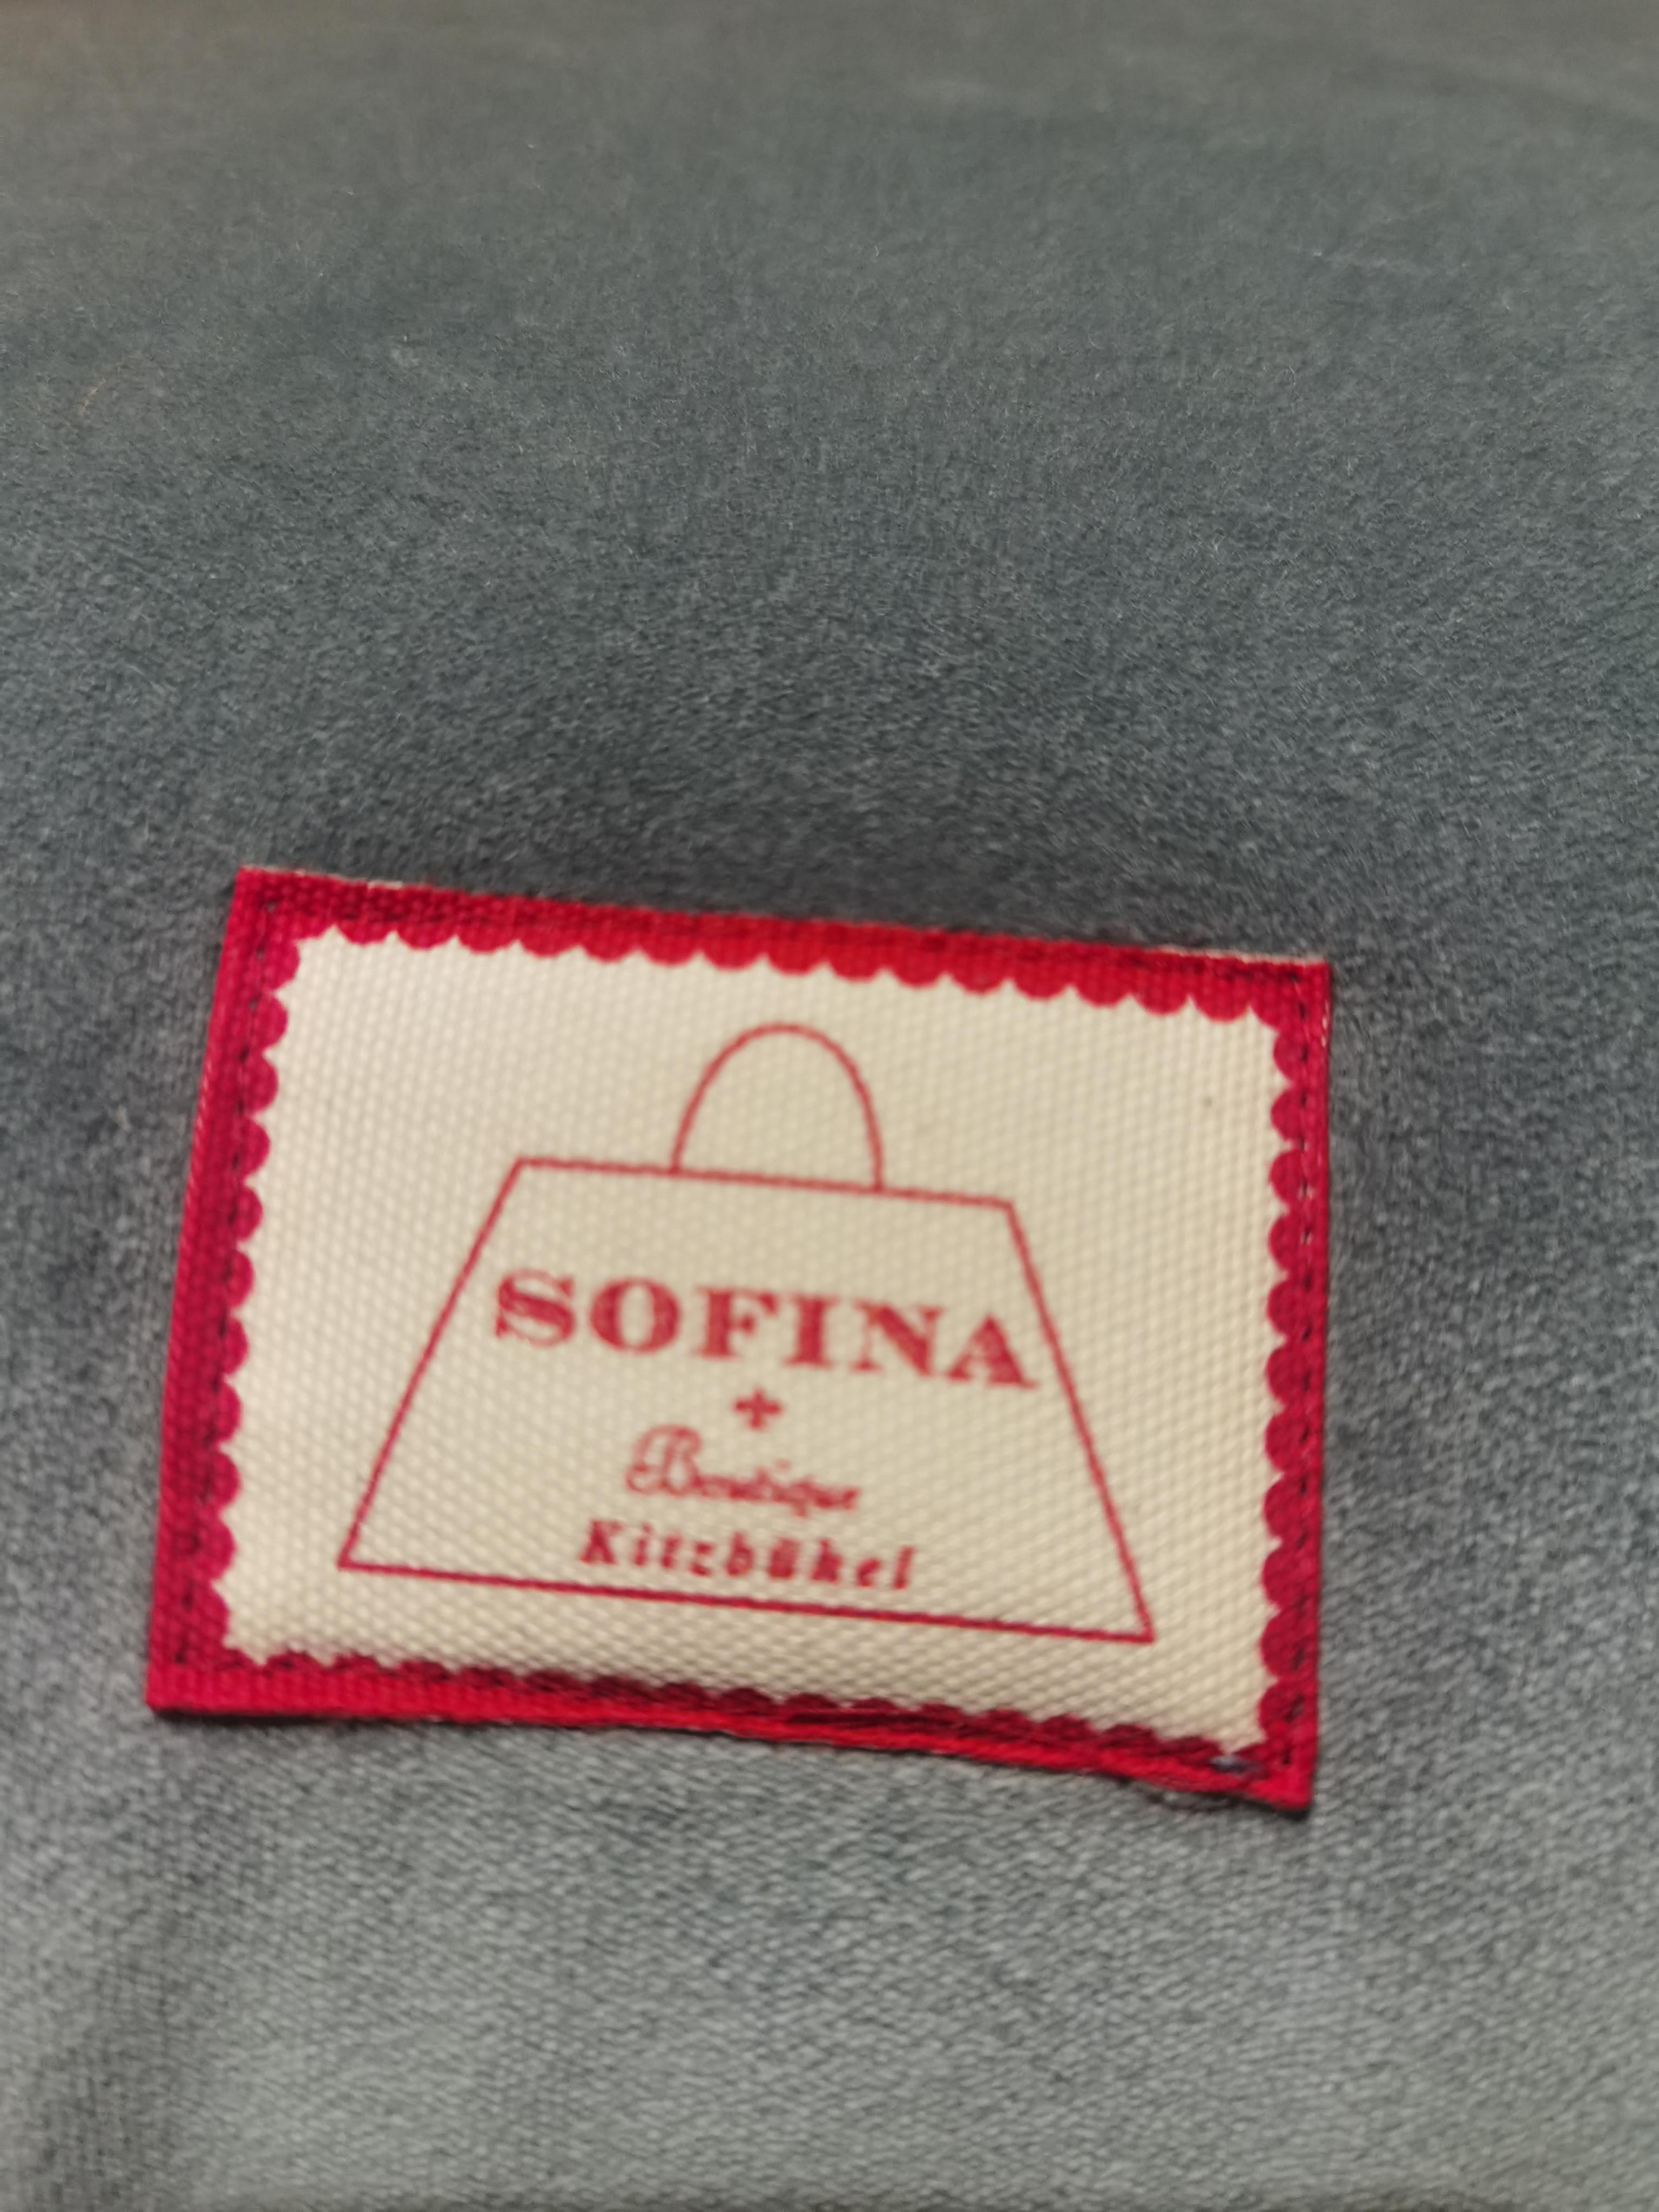 Austrian Country Style Handmade Cushion Velvet Sofina Boutique Kitzbuehel For Sale